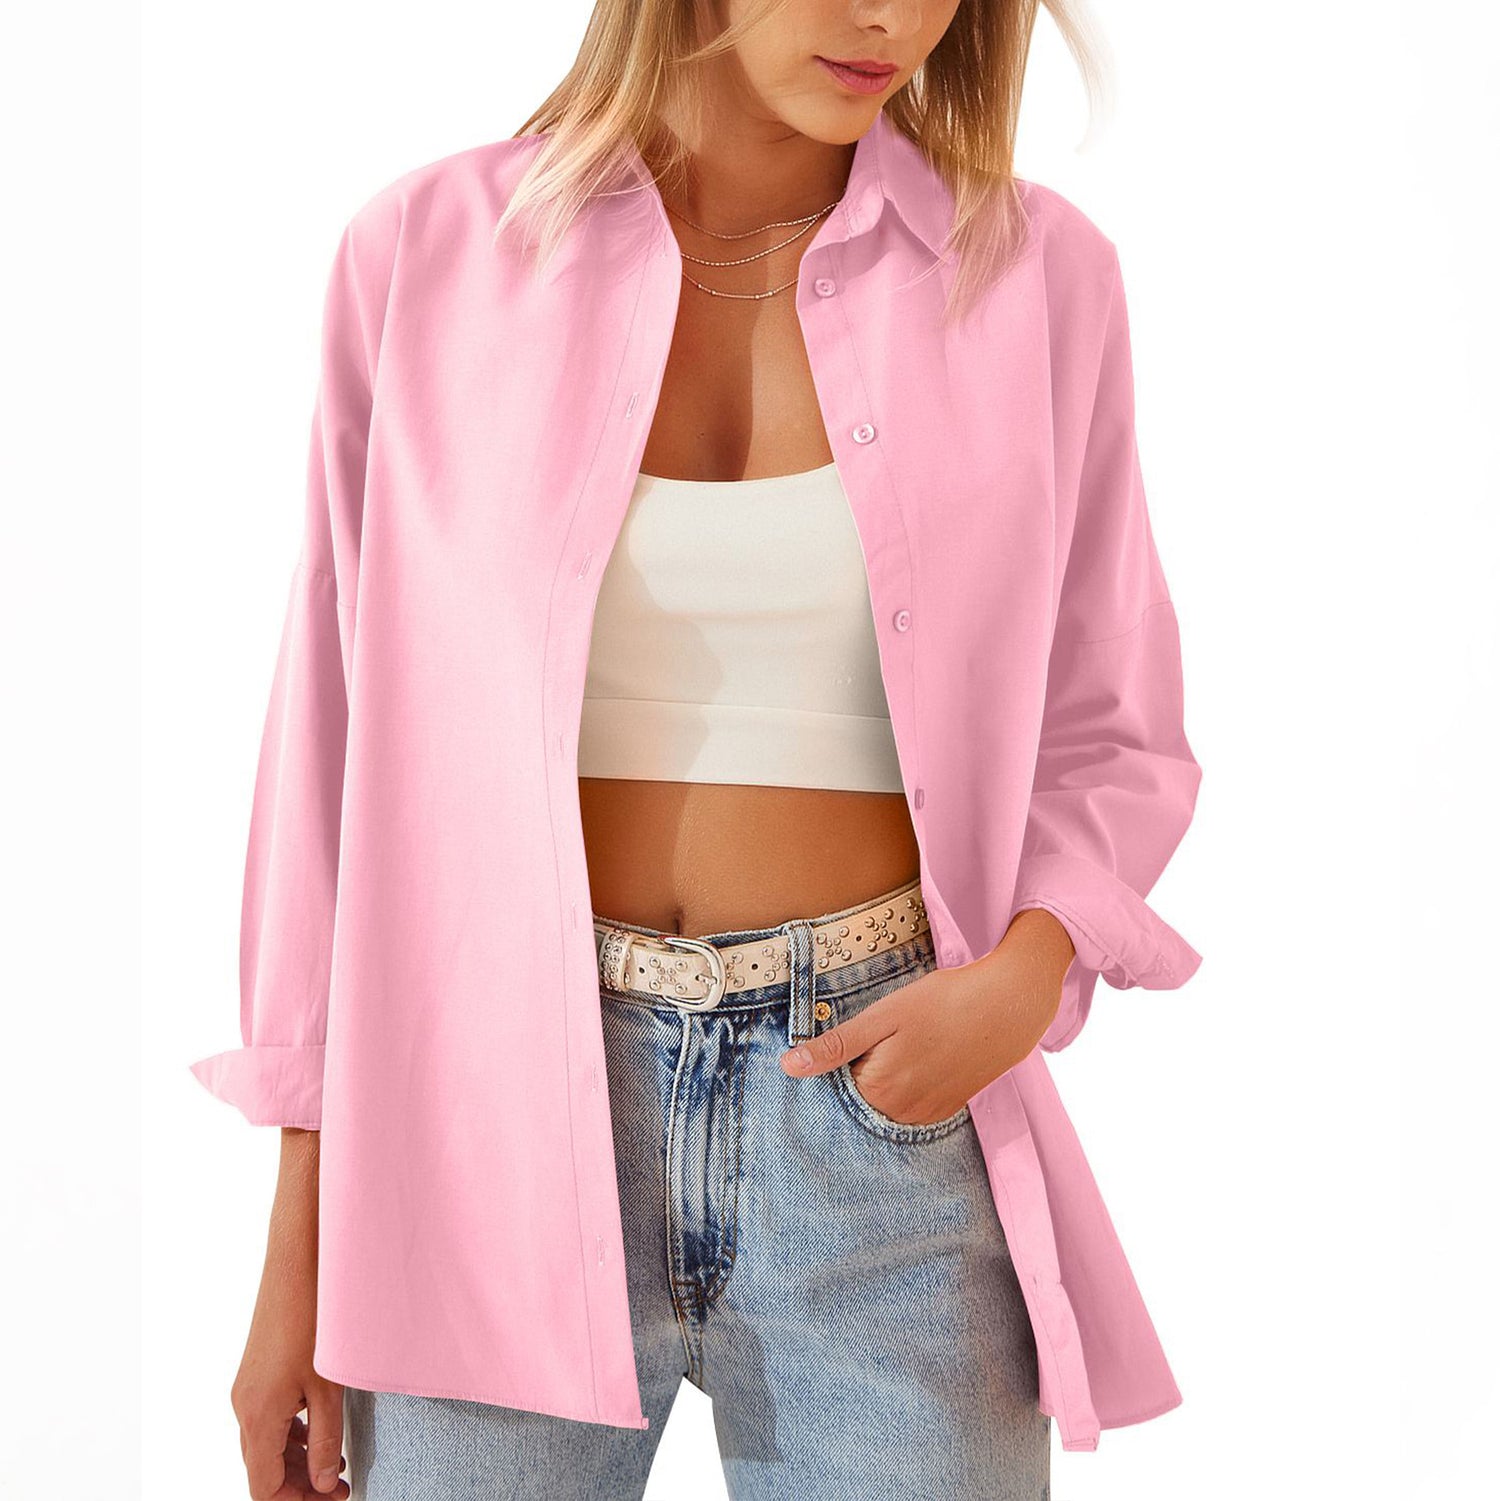 Shirt  | Women's Shirt Jacket Long Sleeve Blouse Button Down Tops Candy Color Shirt | Pink |  2XL| thecurvestory.myshopify.com